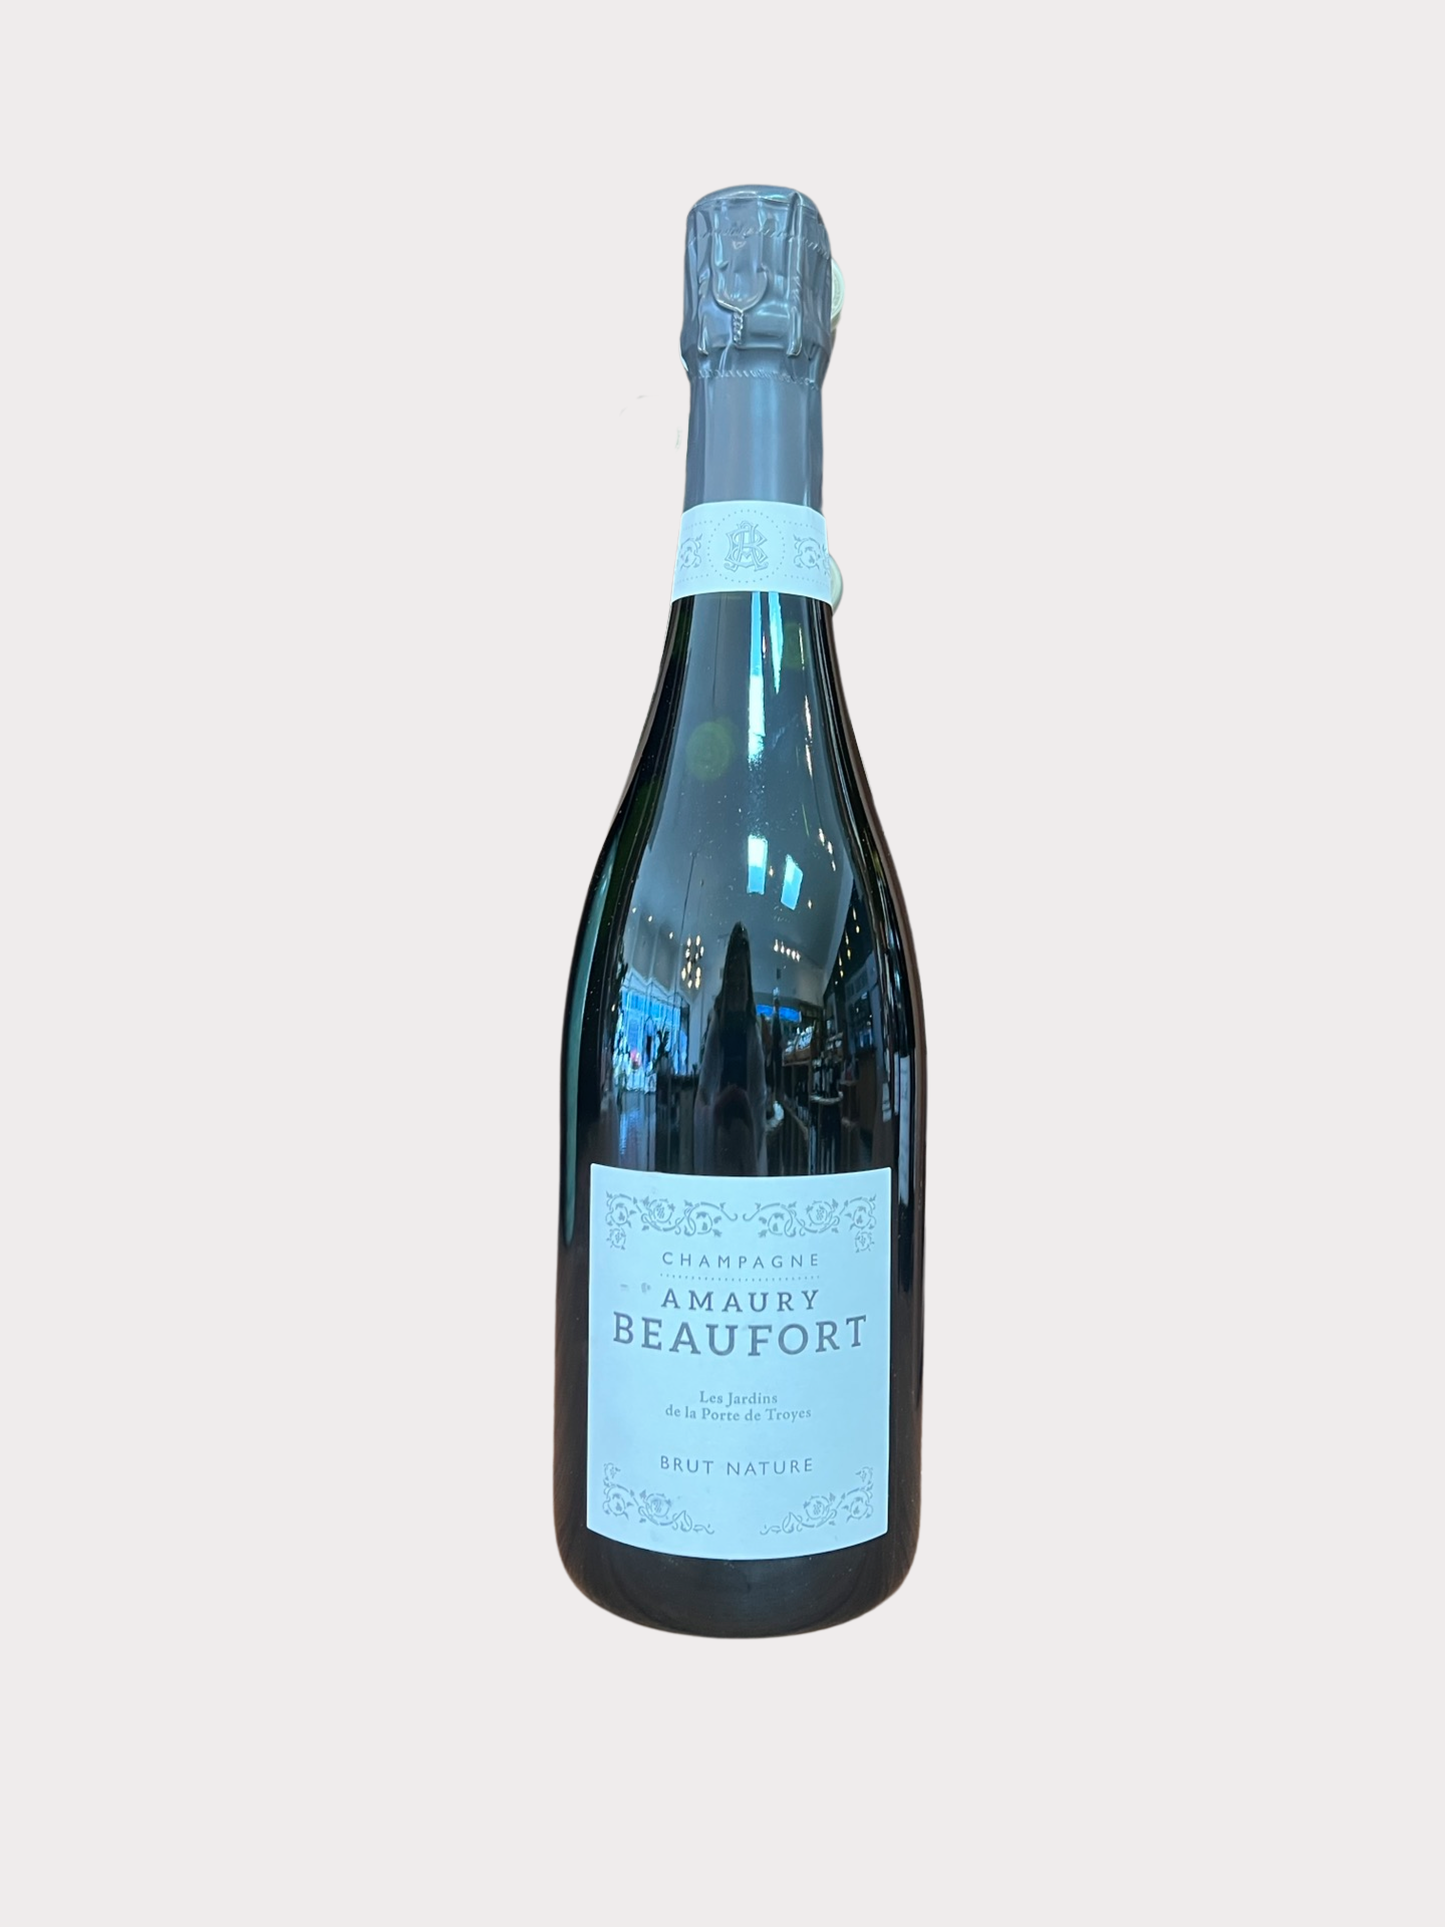 2019 Amaury Beaufort Le Jardinot Brut Nature Champagne